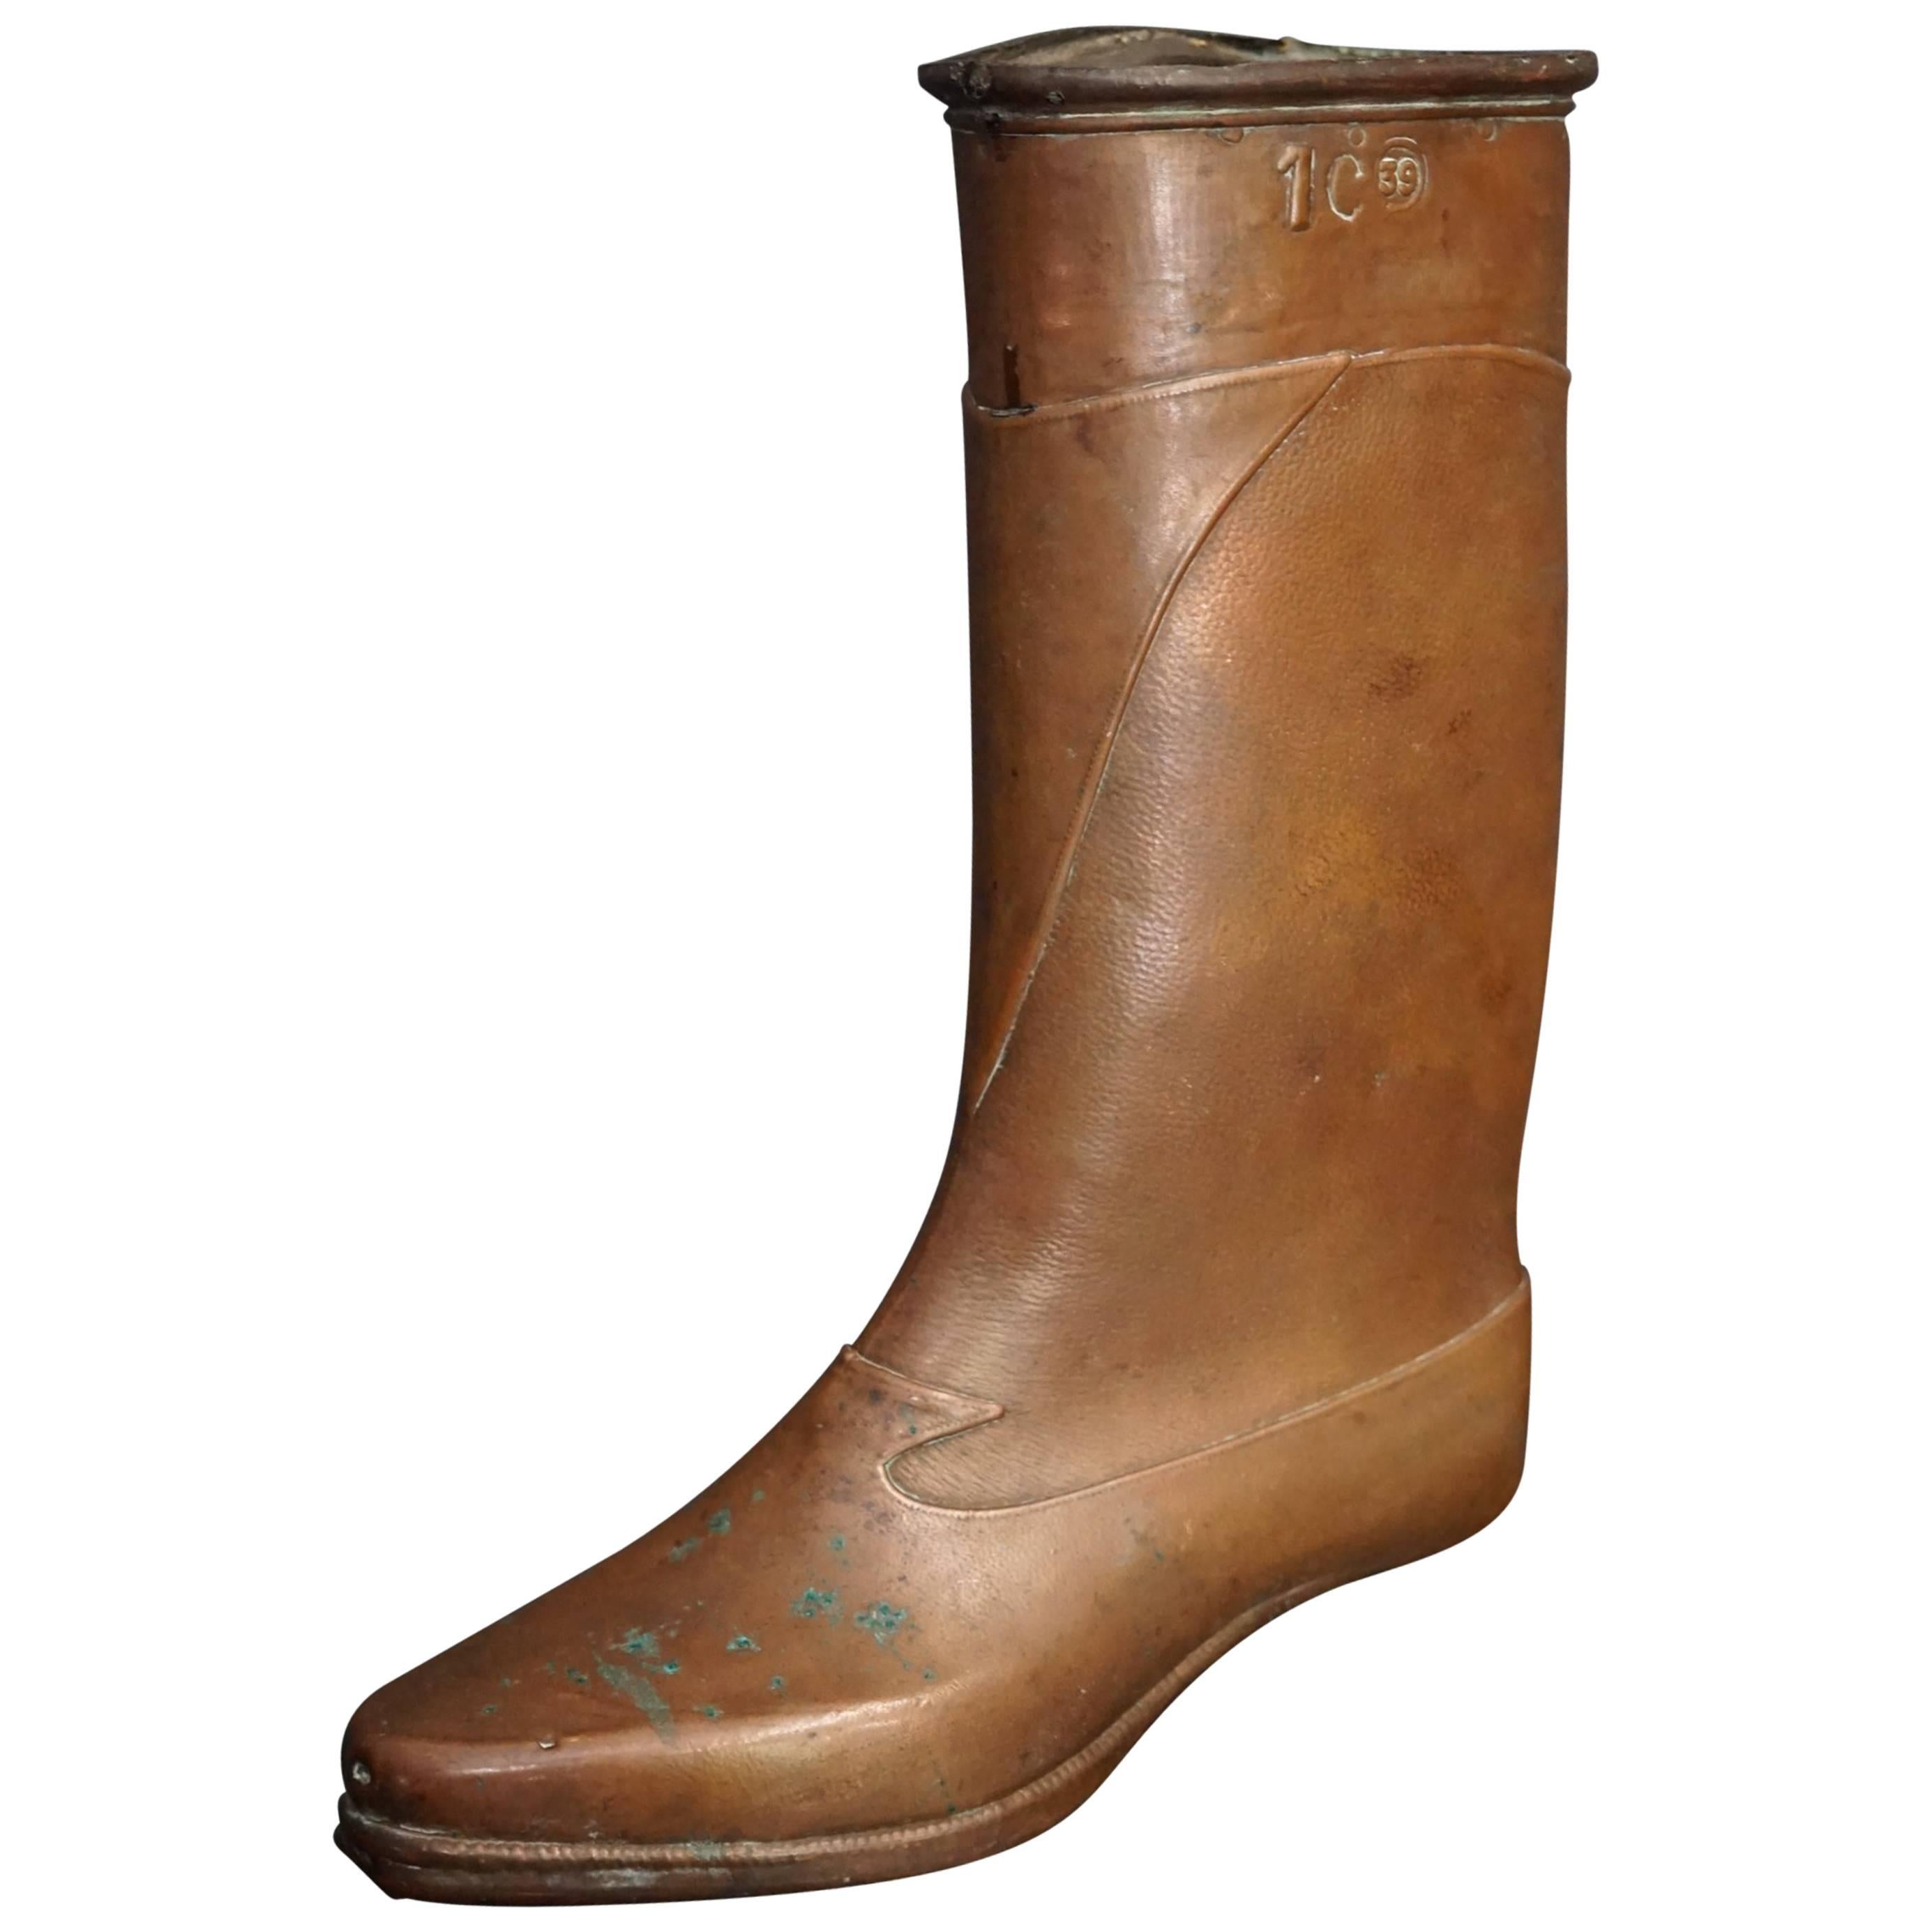 Copper Boot Mold, 1950s